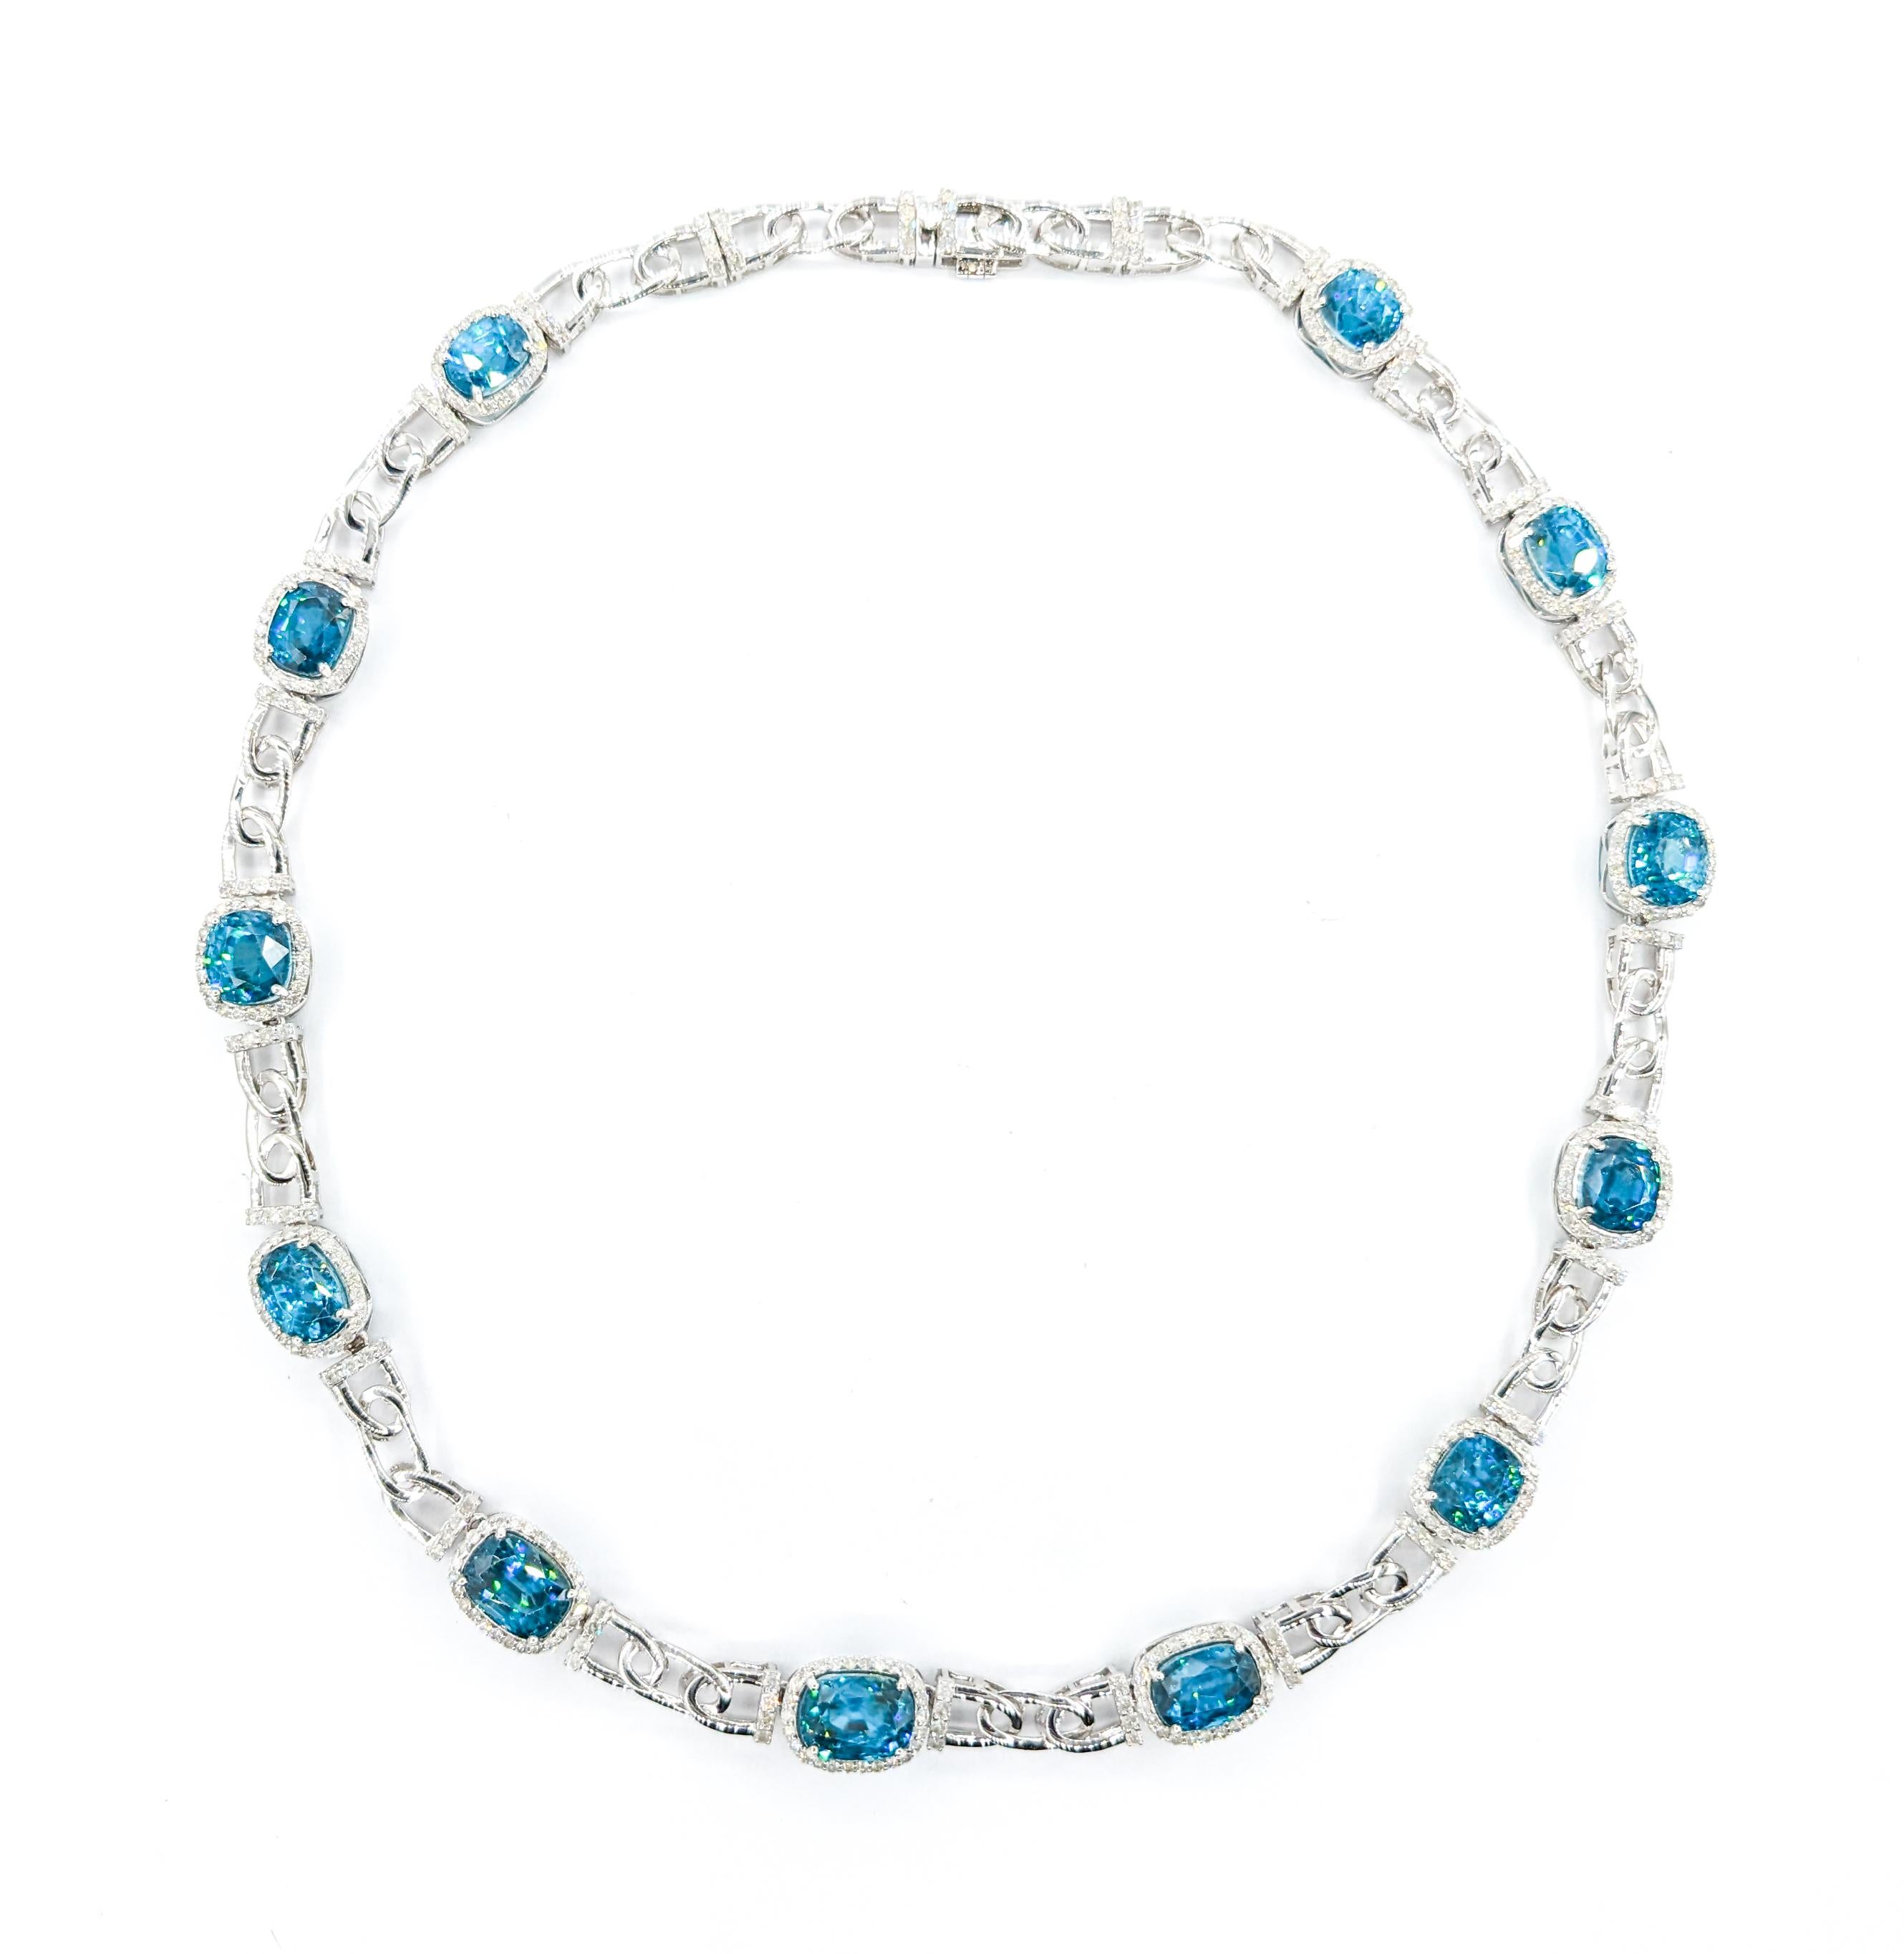 60.81ctw Blue Zircon & 4.53ctw Diamonds Necklace In White Gold For Sale 4